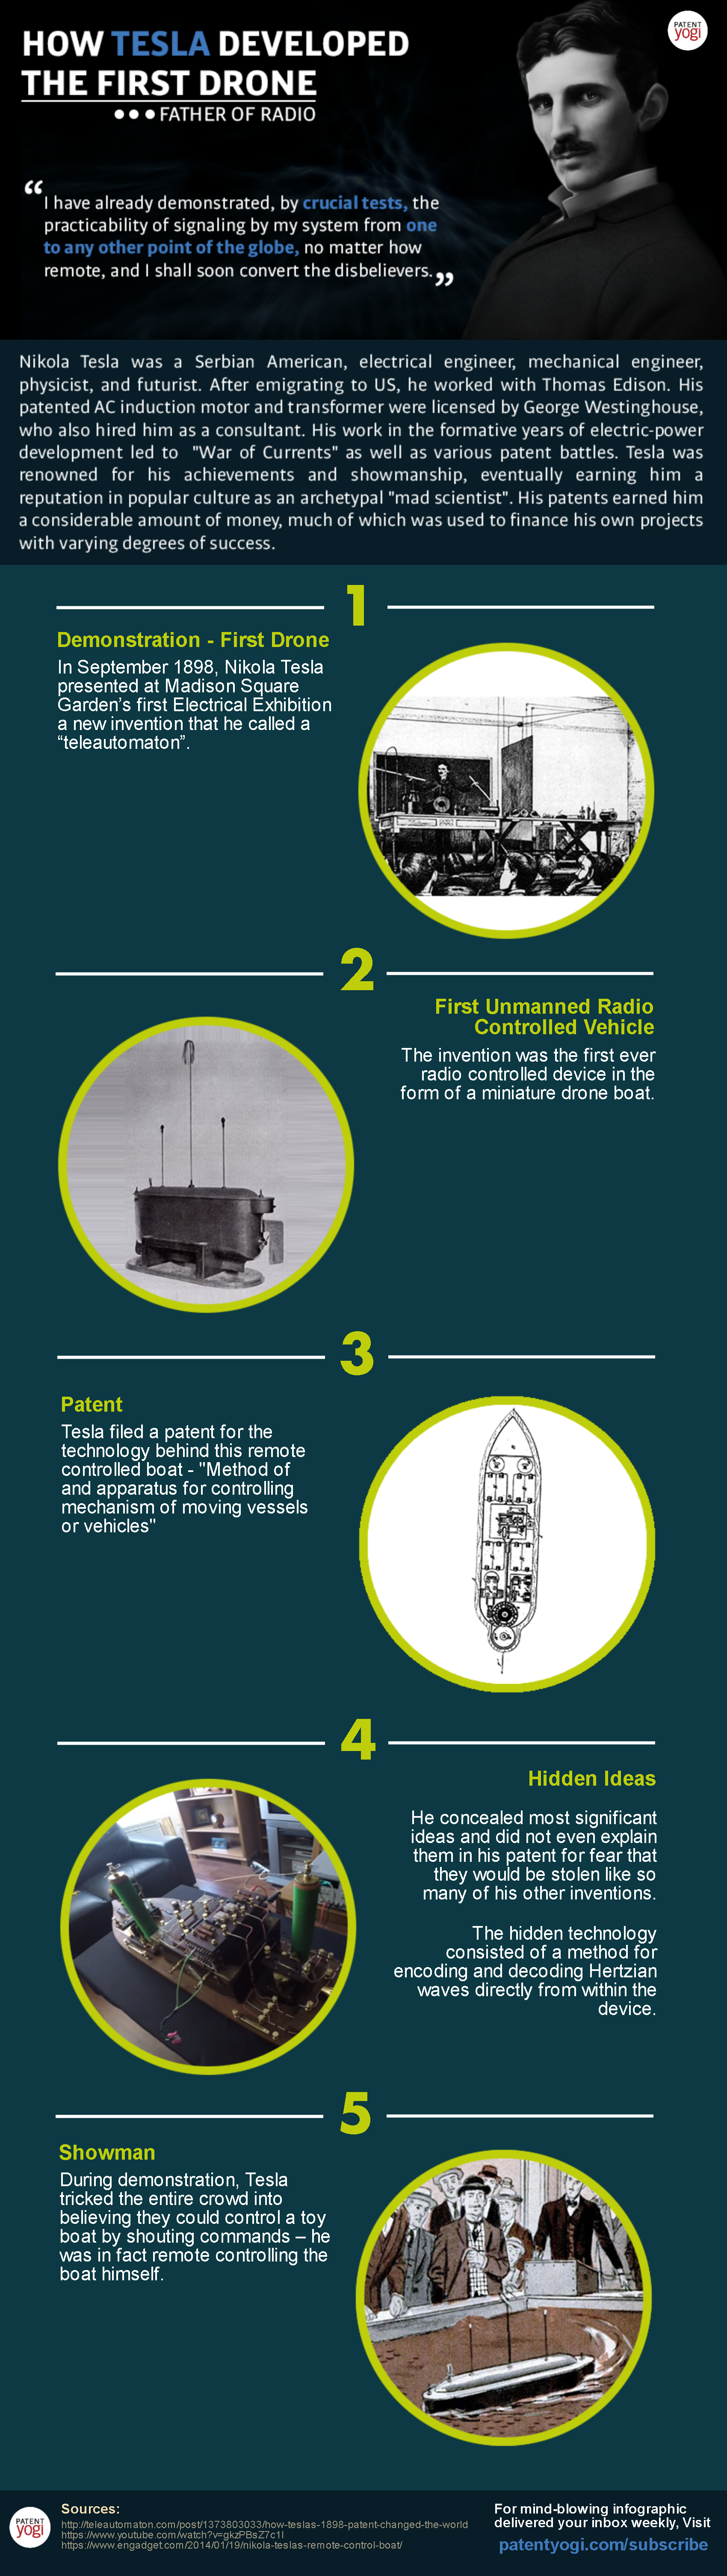 PatentYogi_How Tesla developed the first drone